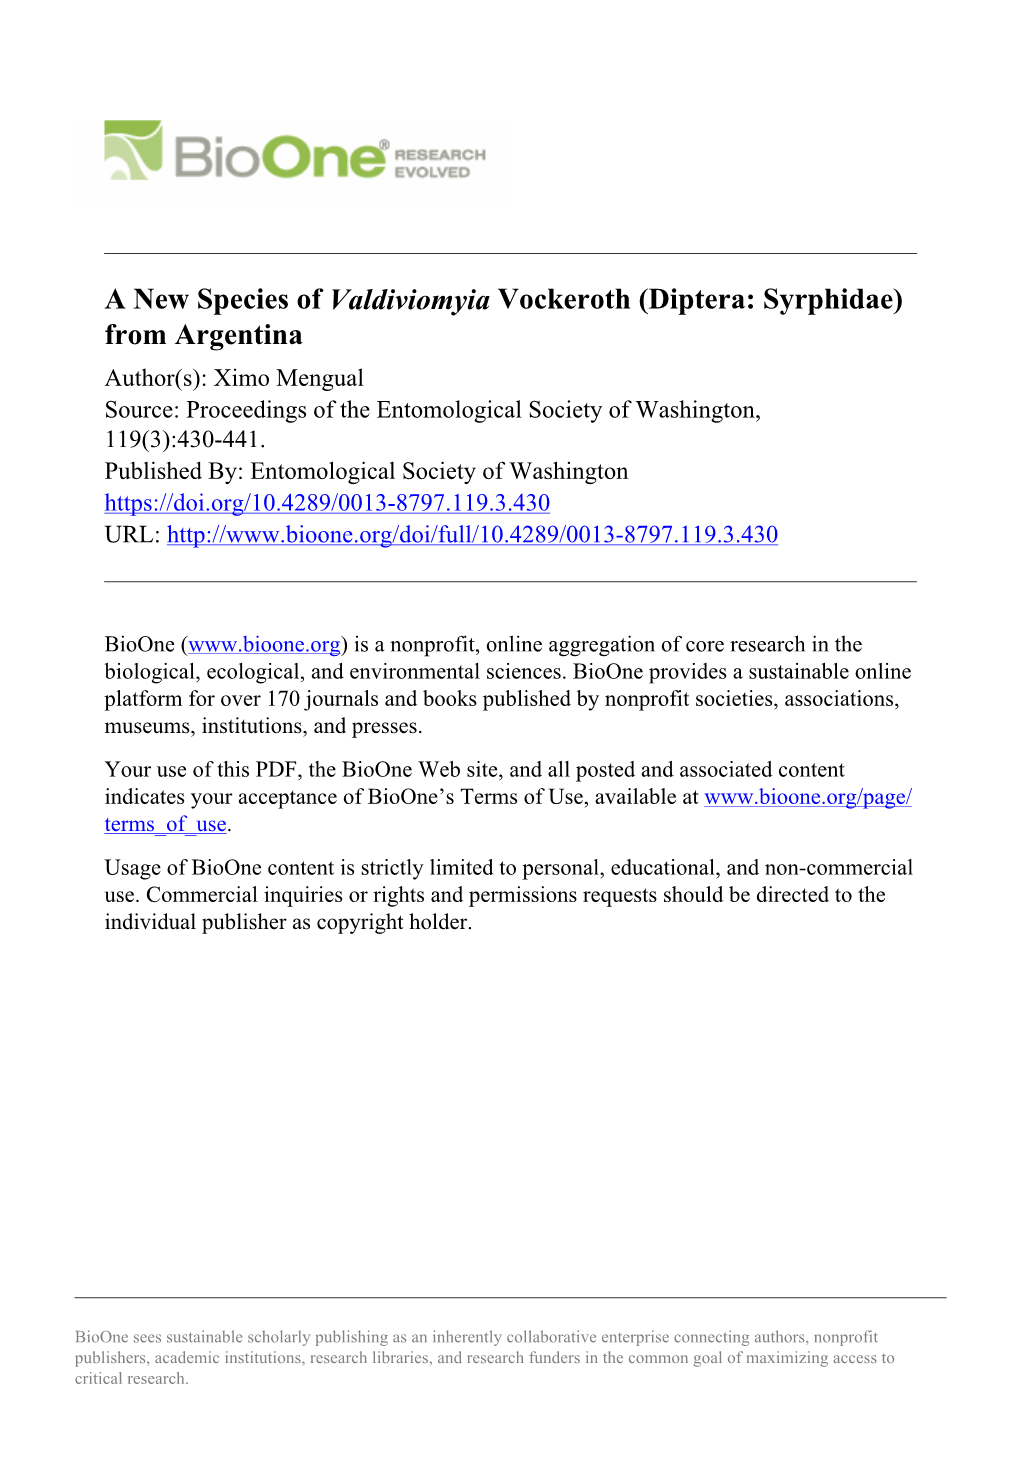 A New Species of Valdiviomyia Vockeroth (Diptera: Syrphidae) From